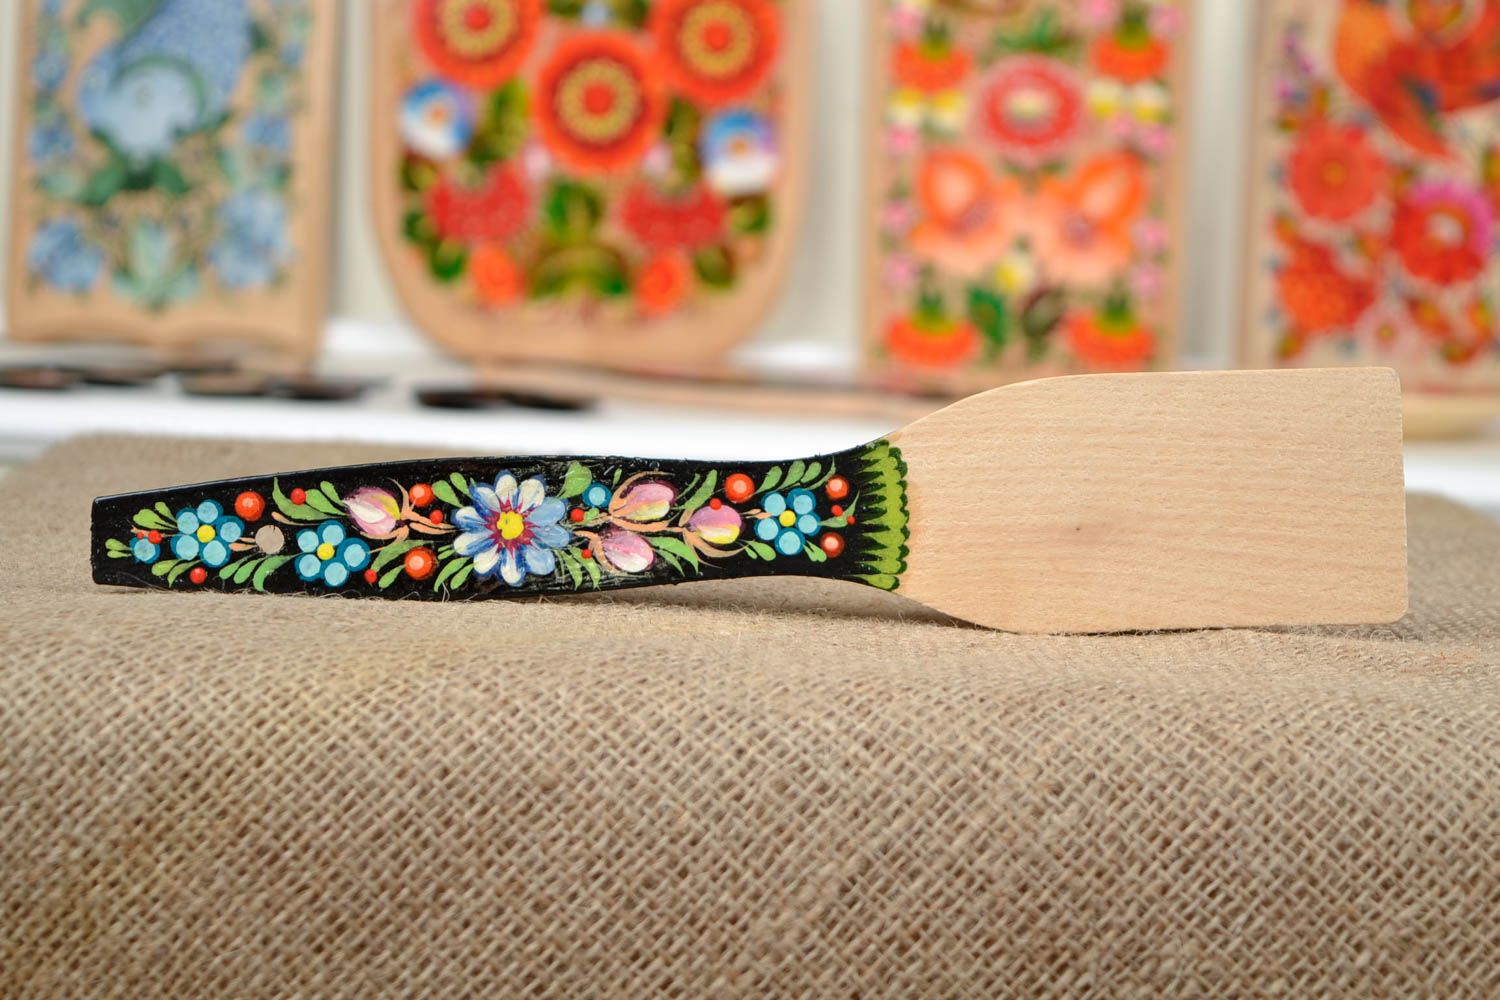 Handmade wooden spatula designer Petrykivka painting kitchen tool ethnic decor photo 1